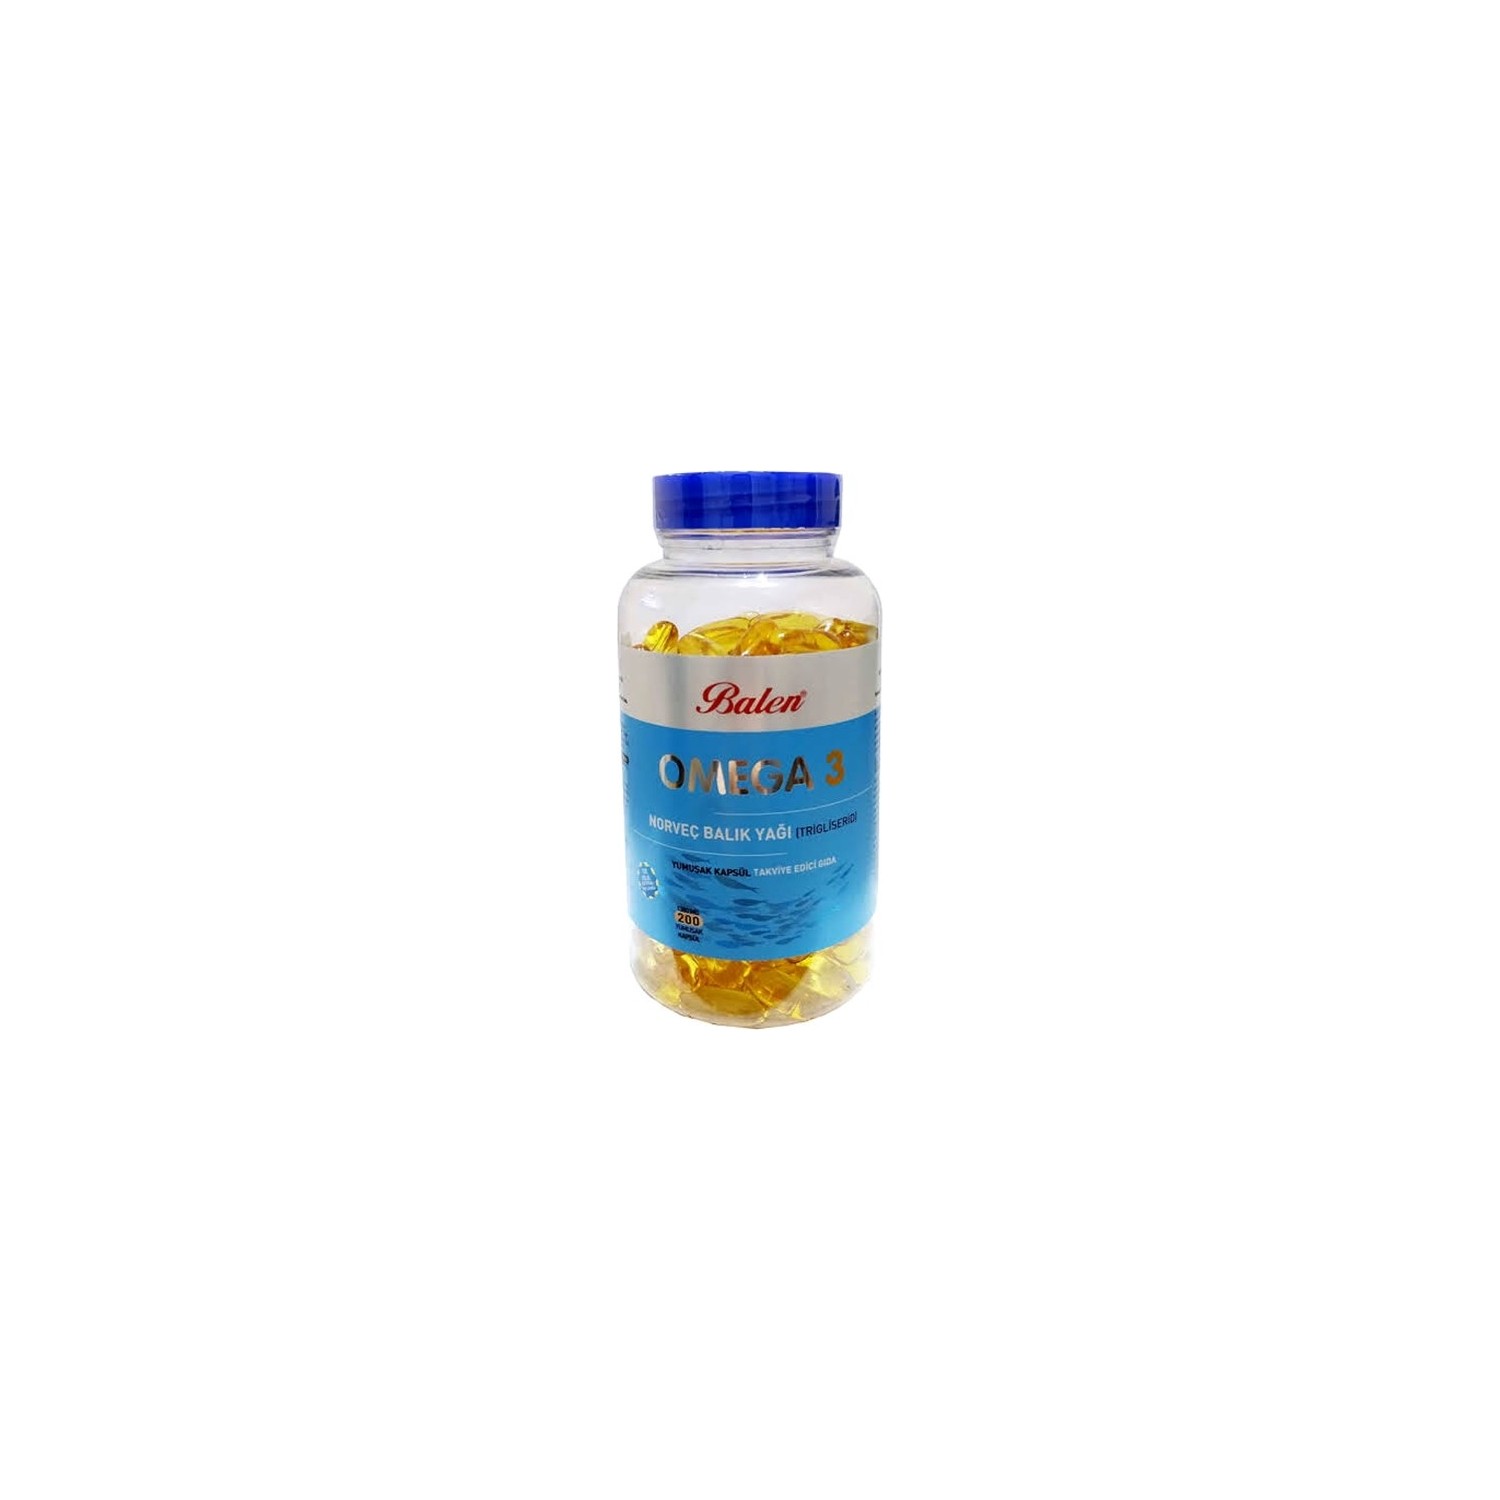 Норвежский рыбий жир Balen Omega-3 (триглицерид) 1380 мг, 200 капсул